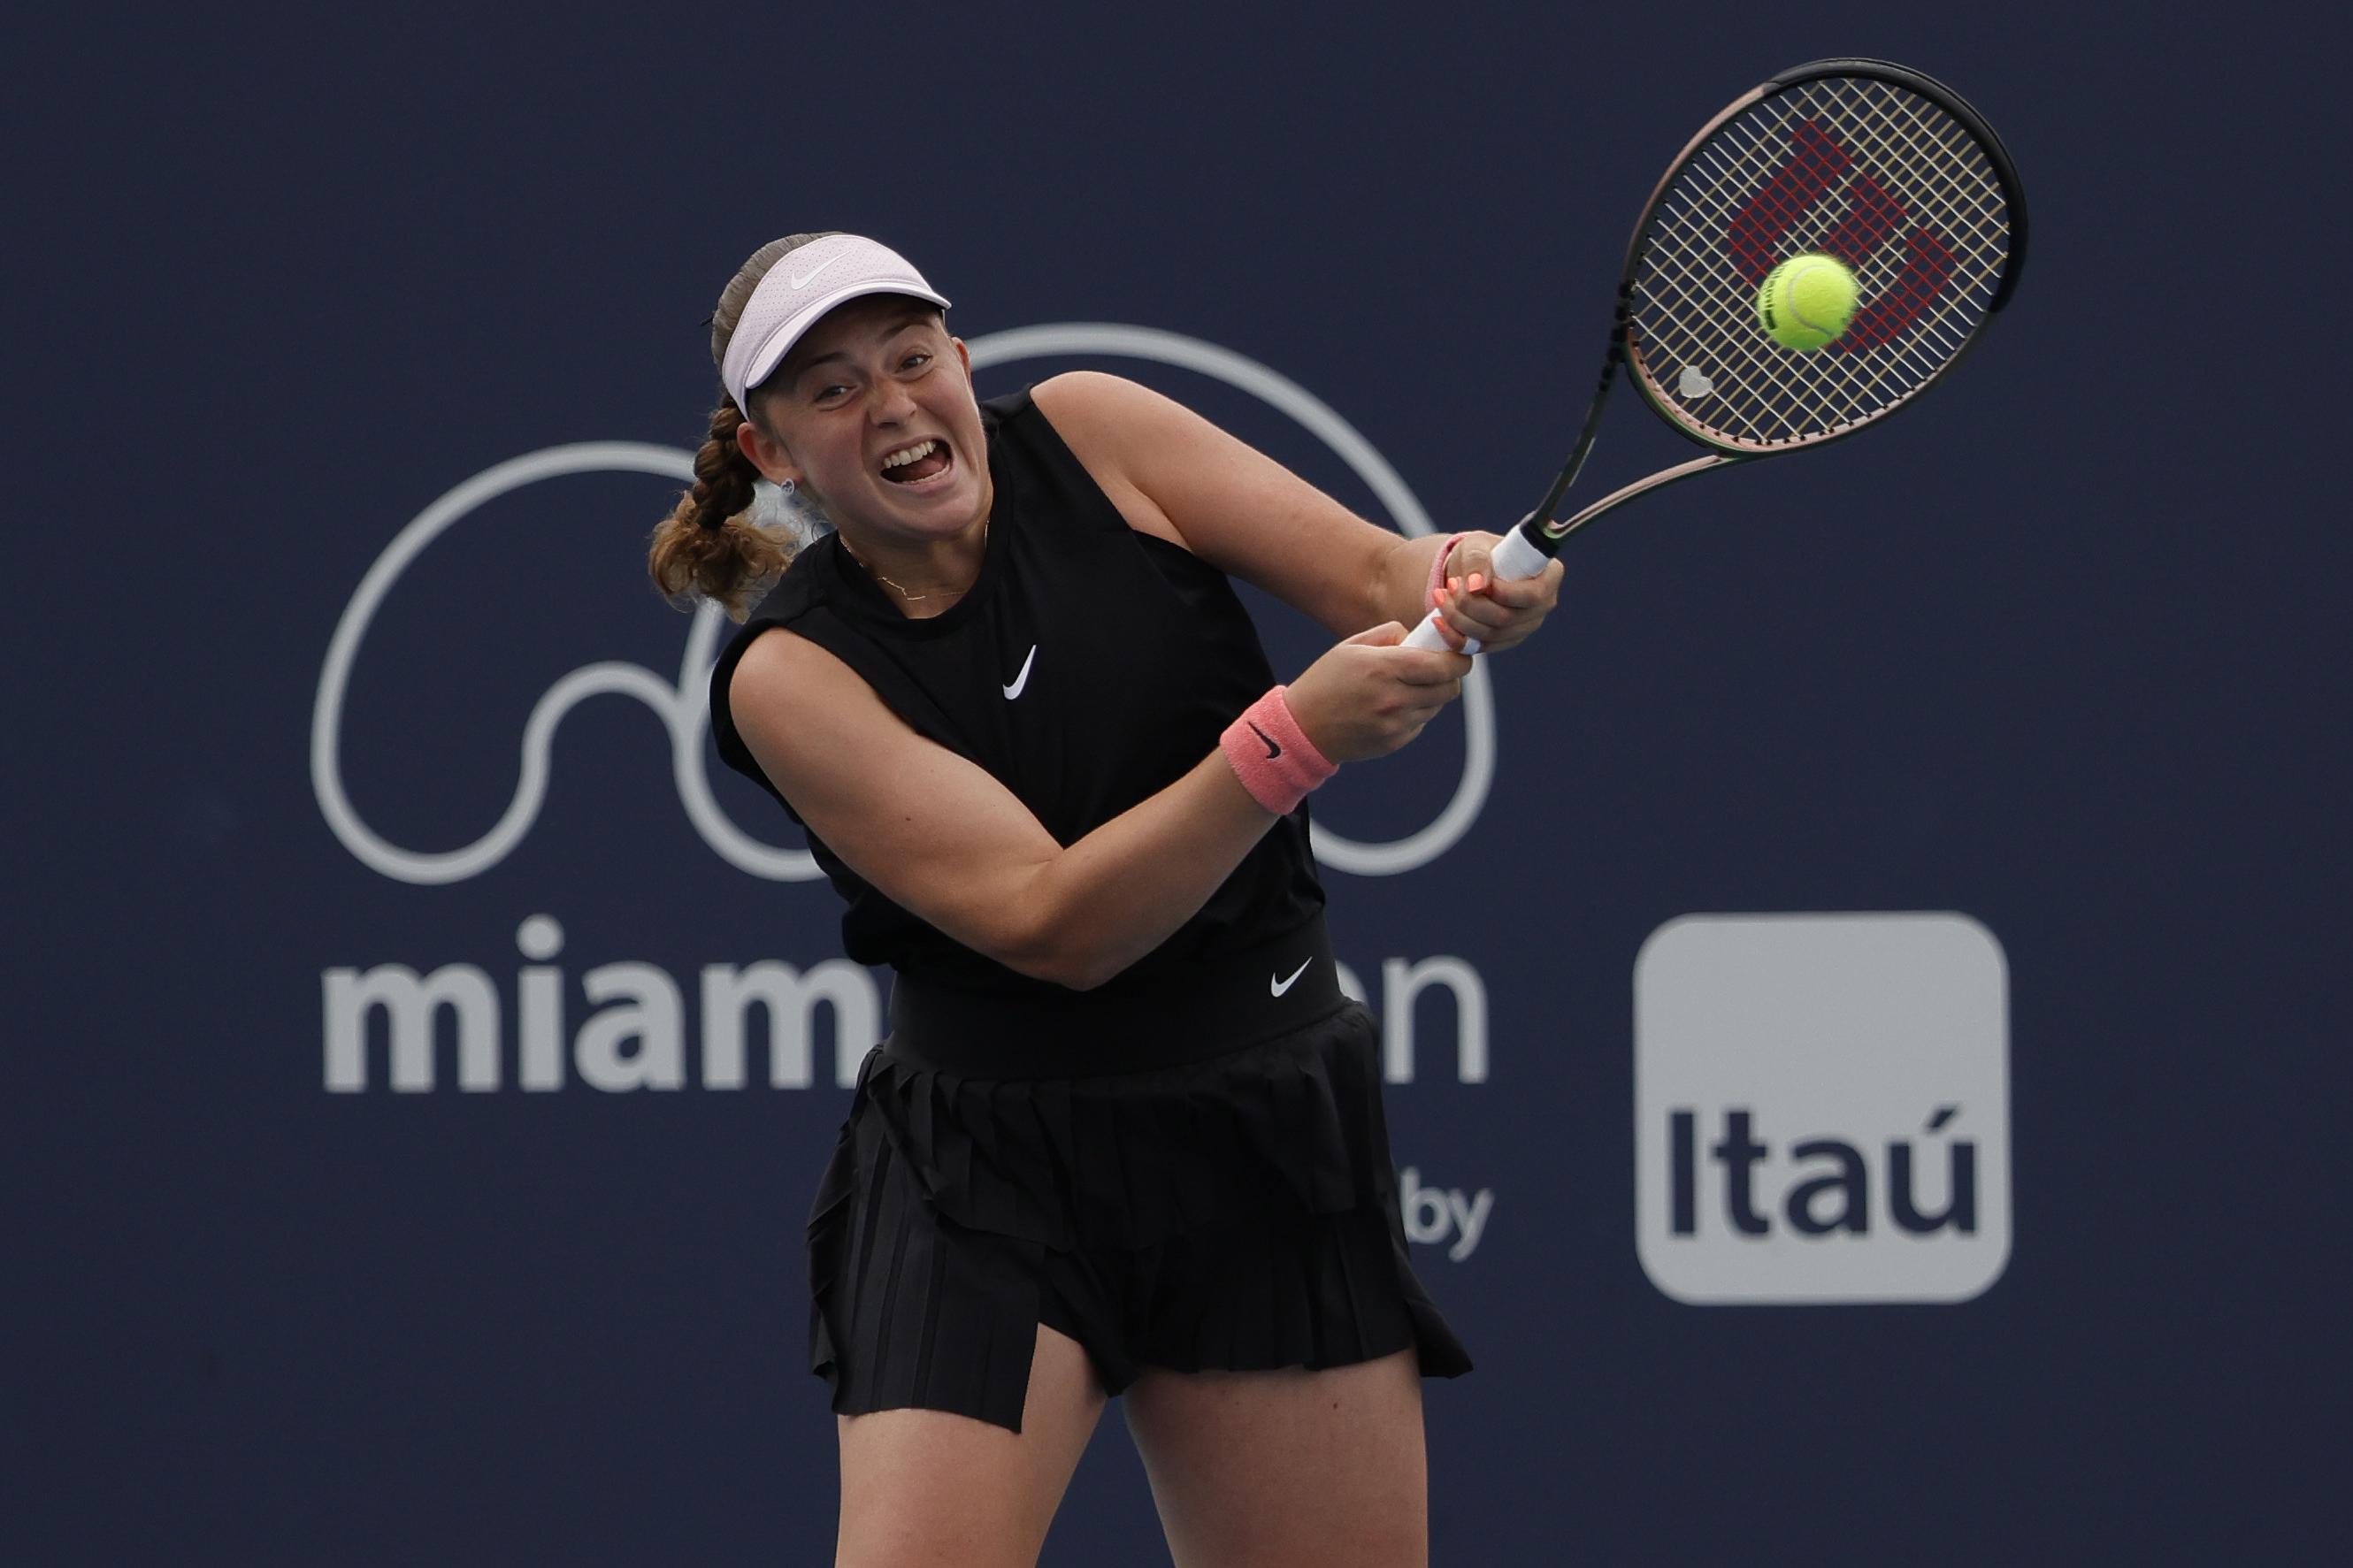 Tatjana Maria vs Jelena Ostapenko Odds, Prediction and Betting Trends for 2022 Wimbledon Women's Round of 16 Match